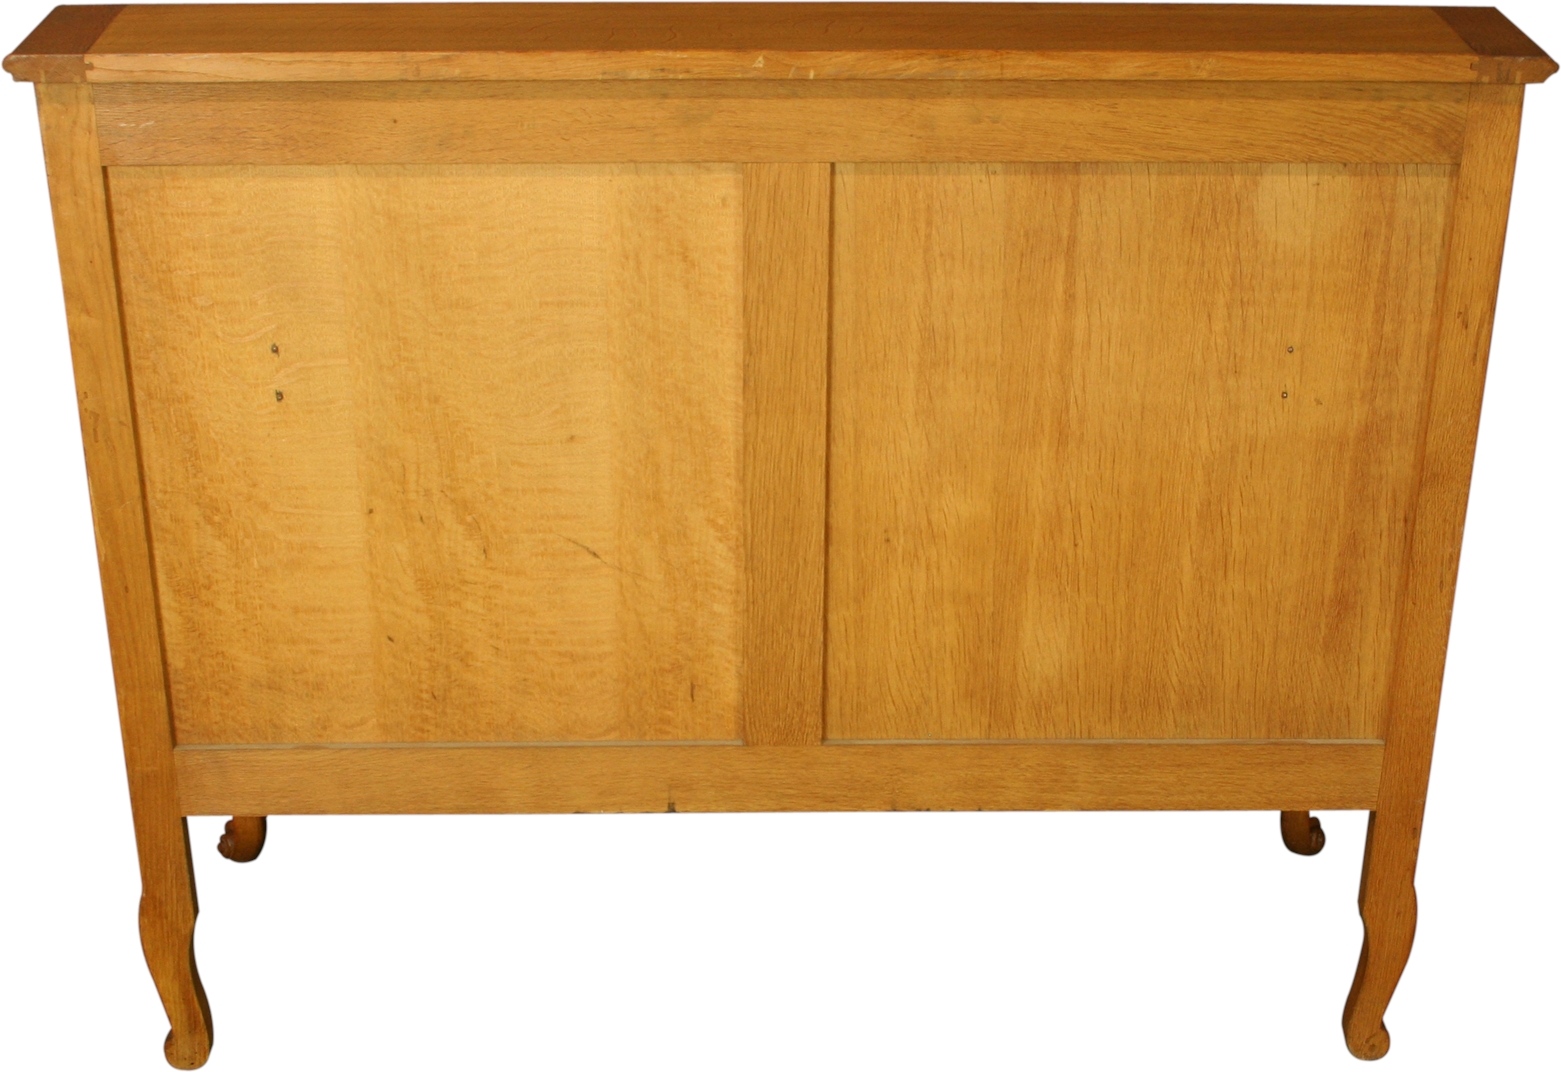 Vintage French Secretary Desk, Quartersawn Golden Oak, Carved, Louis XV Style-Image 17